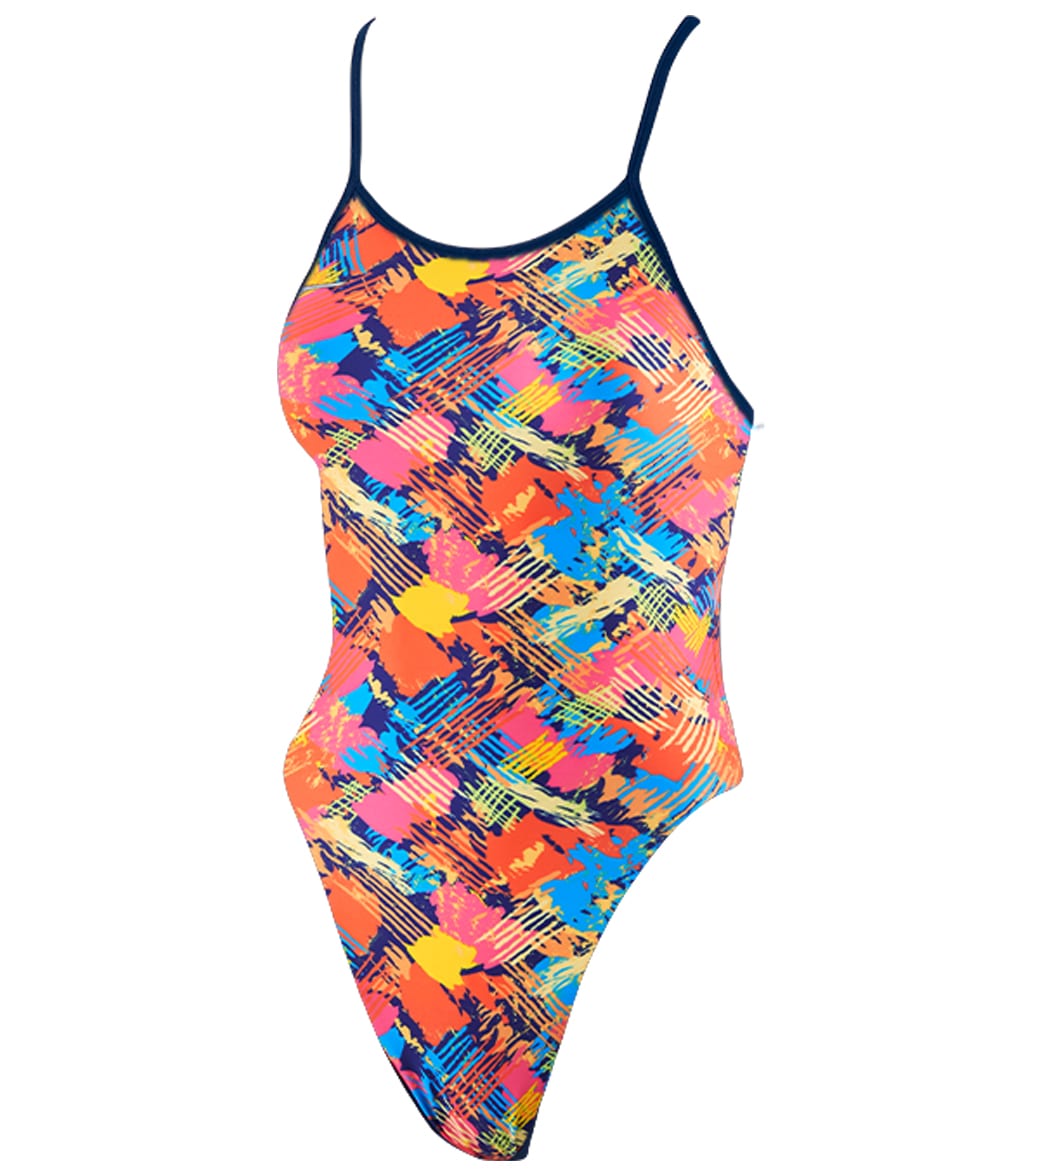 Mizuno Women's Exer Print Thin Strap One Piece Swimsuit - Orange 20 Polyester - Swimoutlet.com